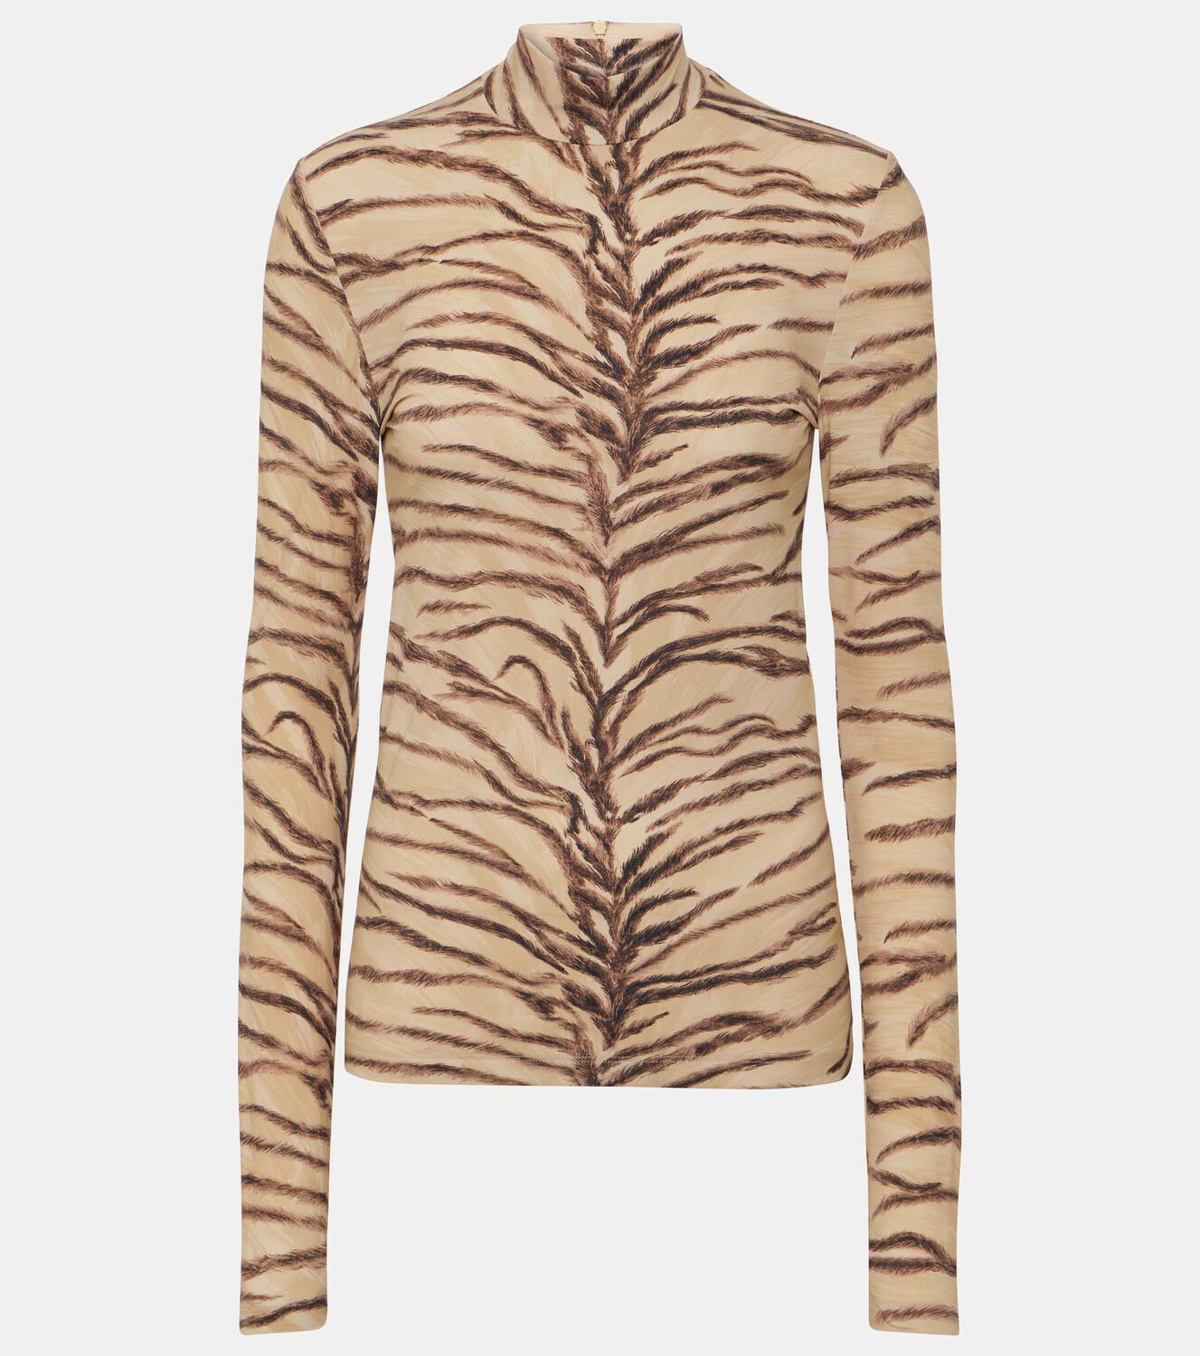 Stella McCartney Tiger-print jersey top